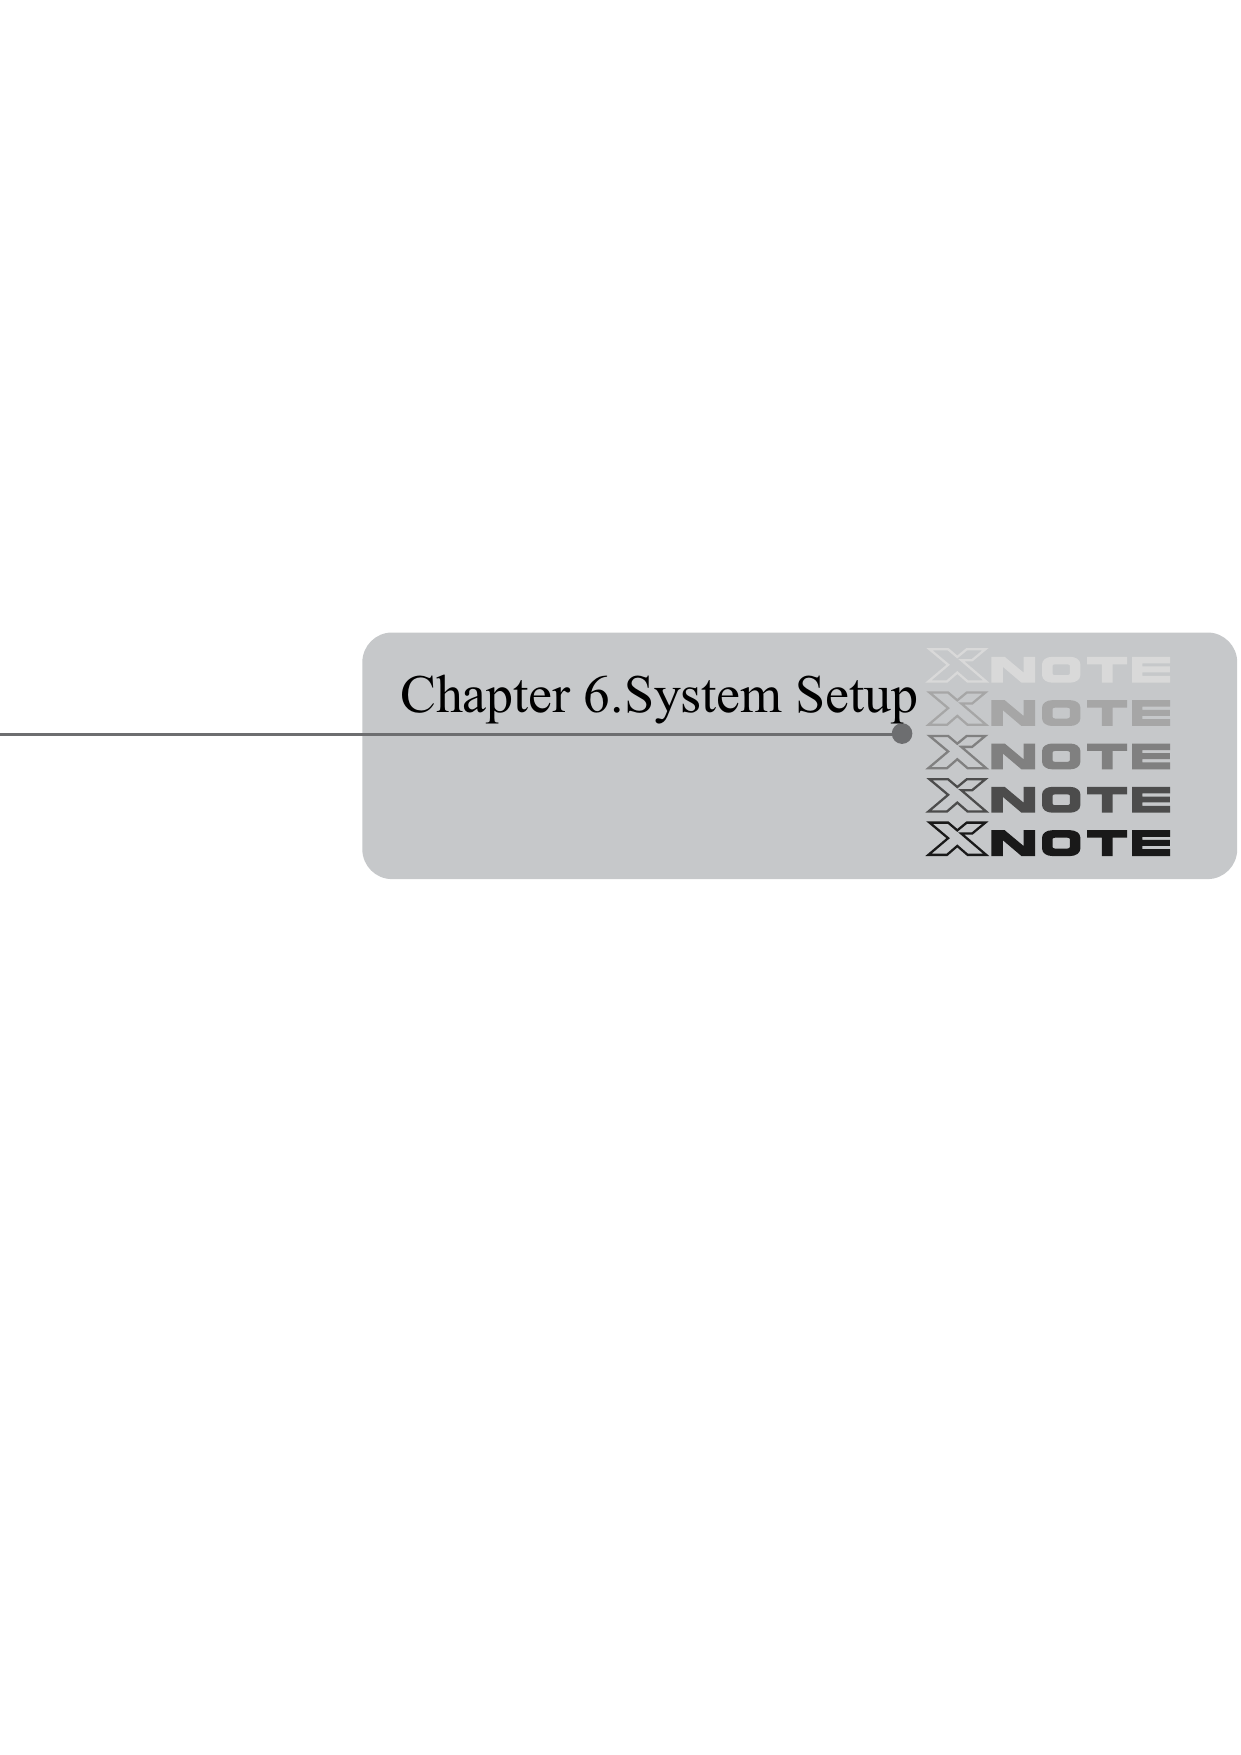  Chapter 6.System Setup